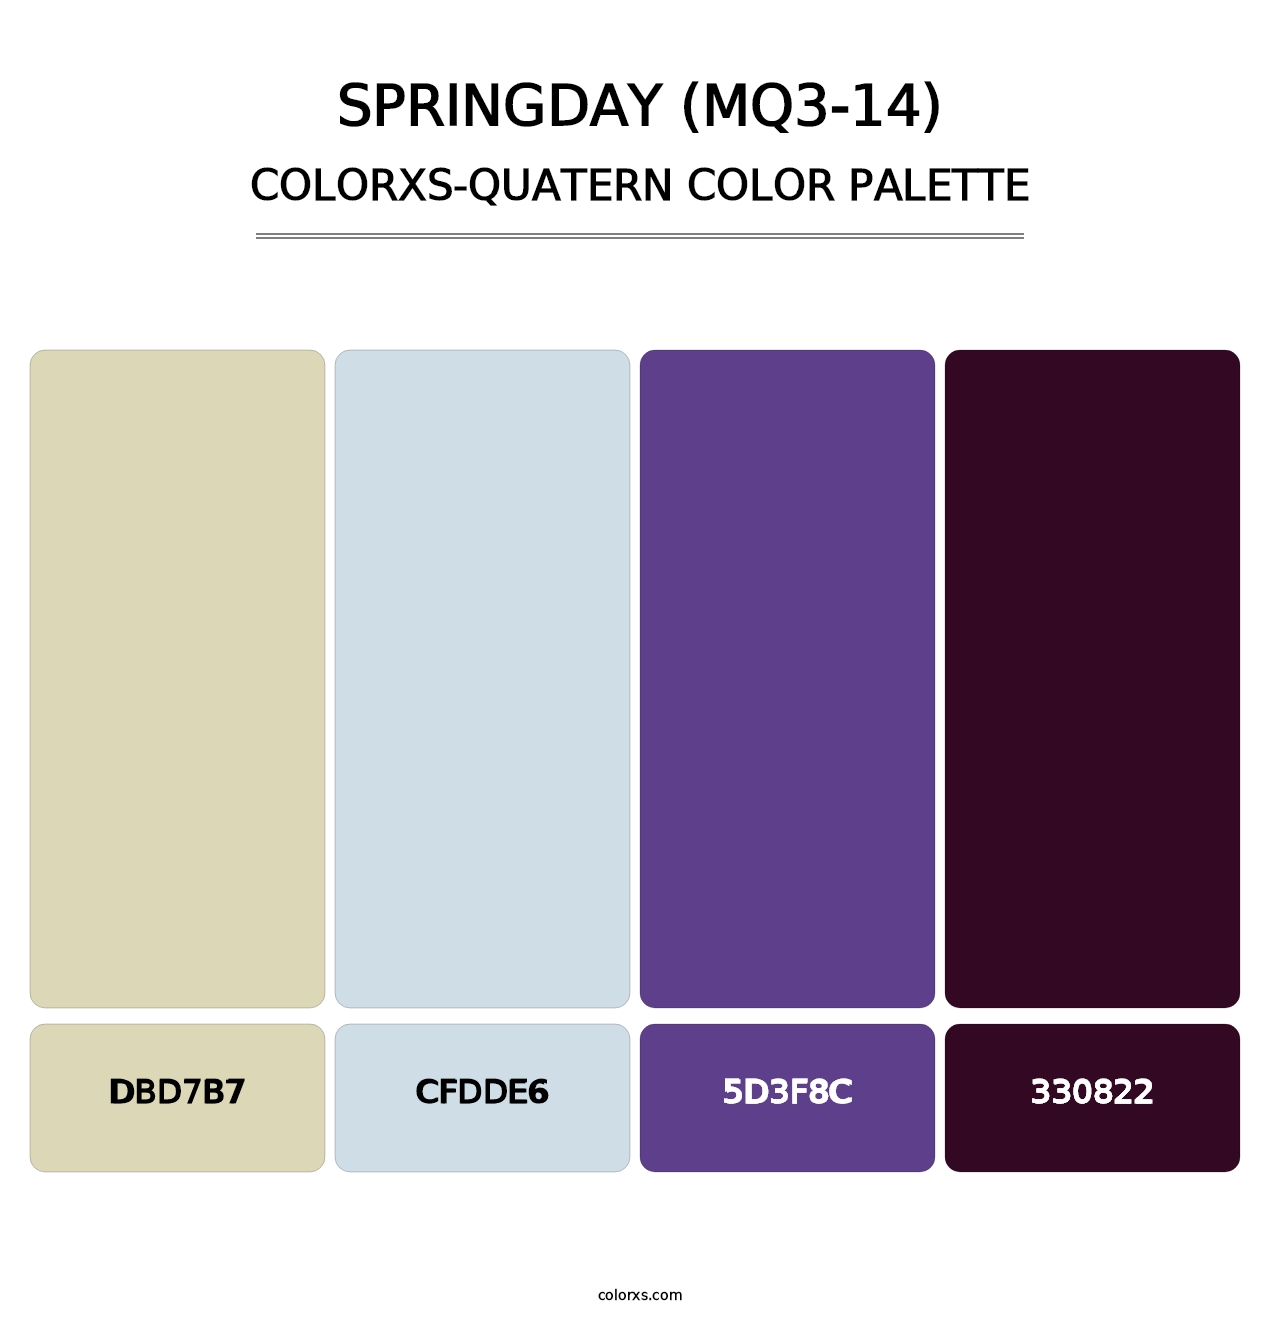 Springday (MQ3-14) - Colorxs Quatern Palette